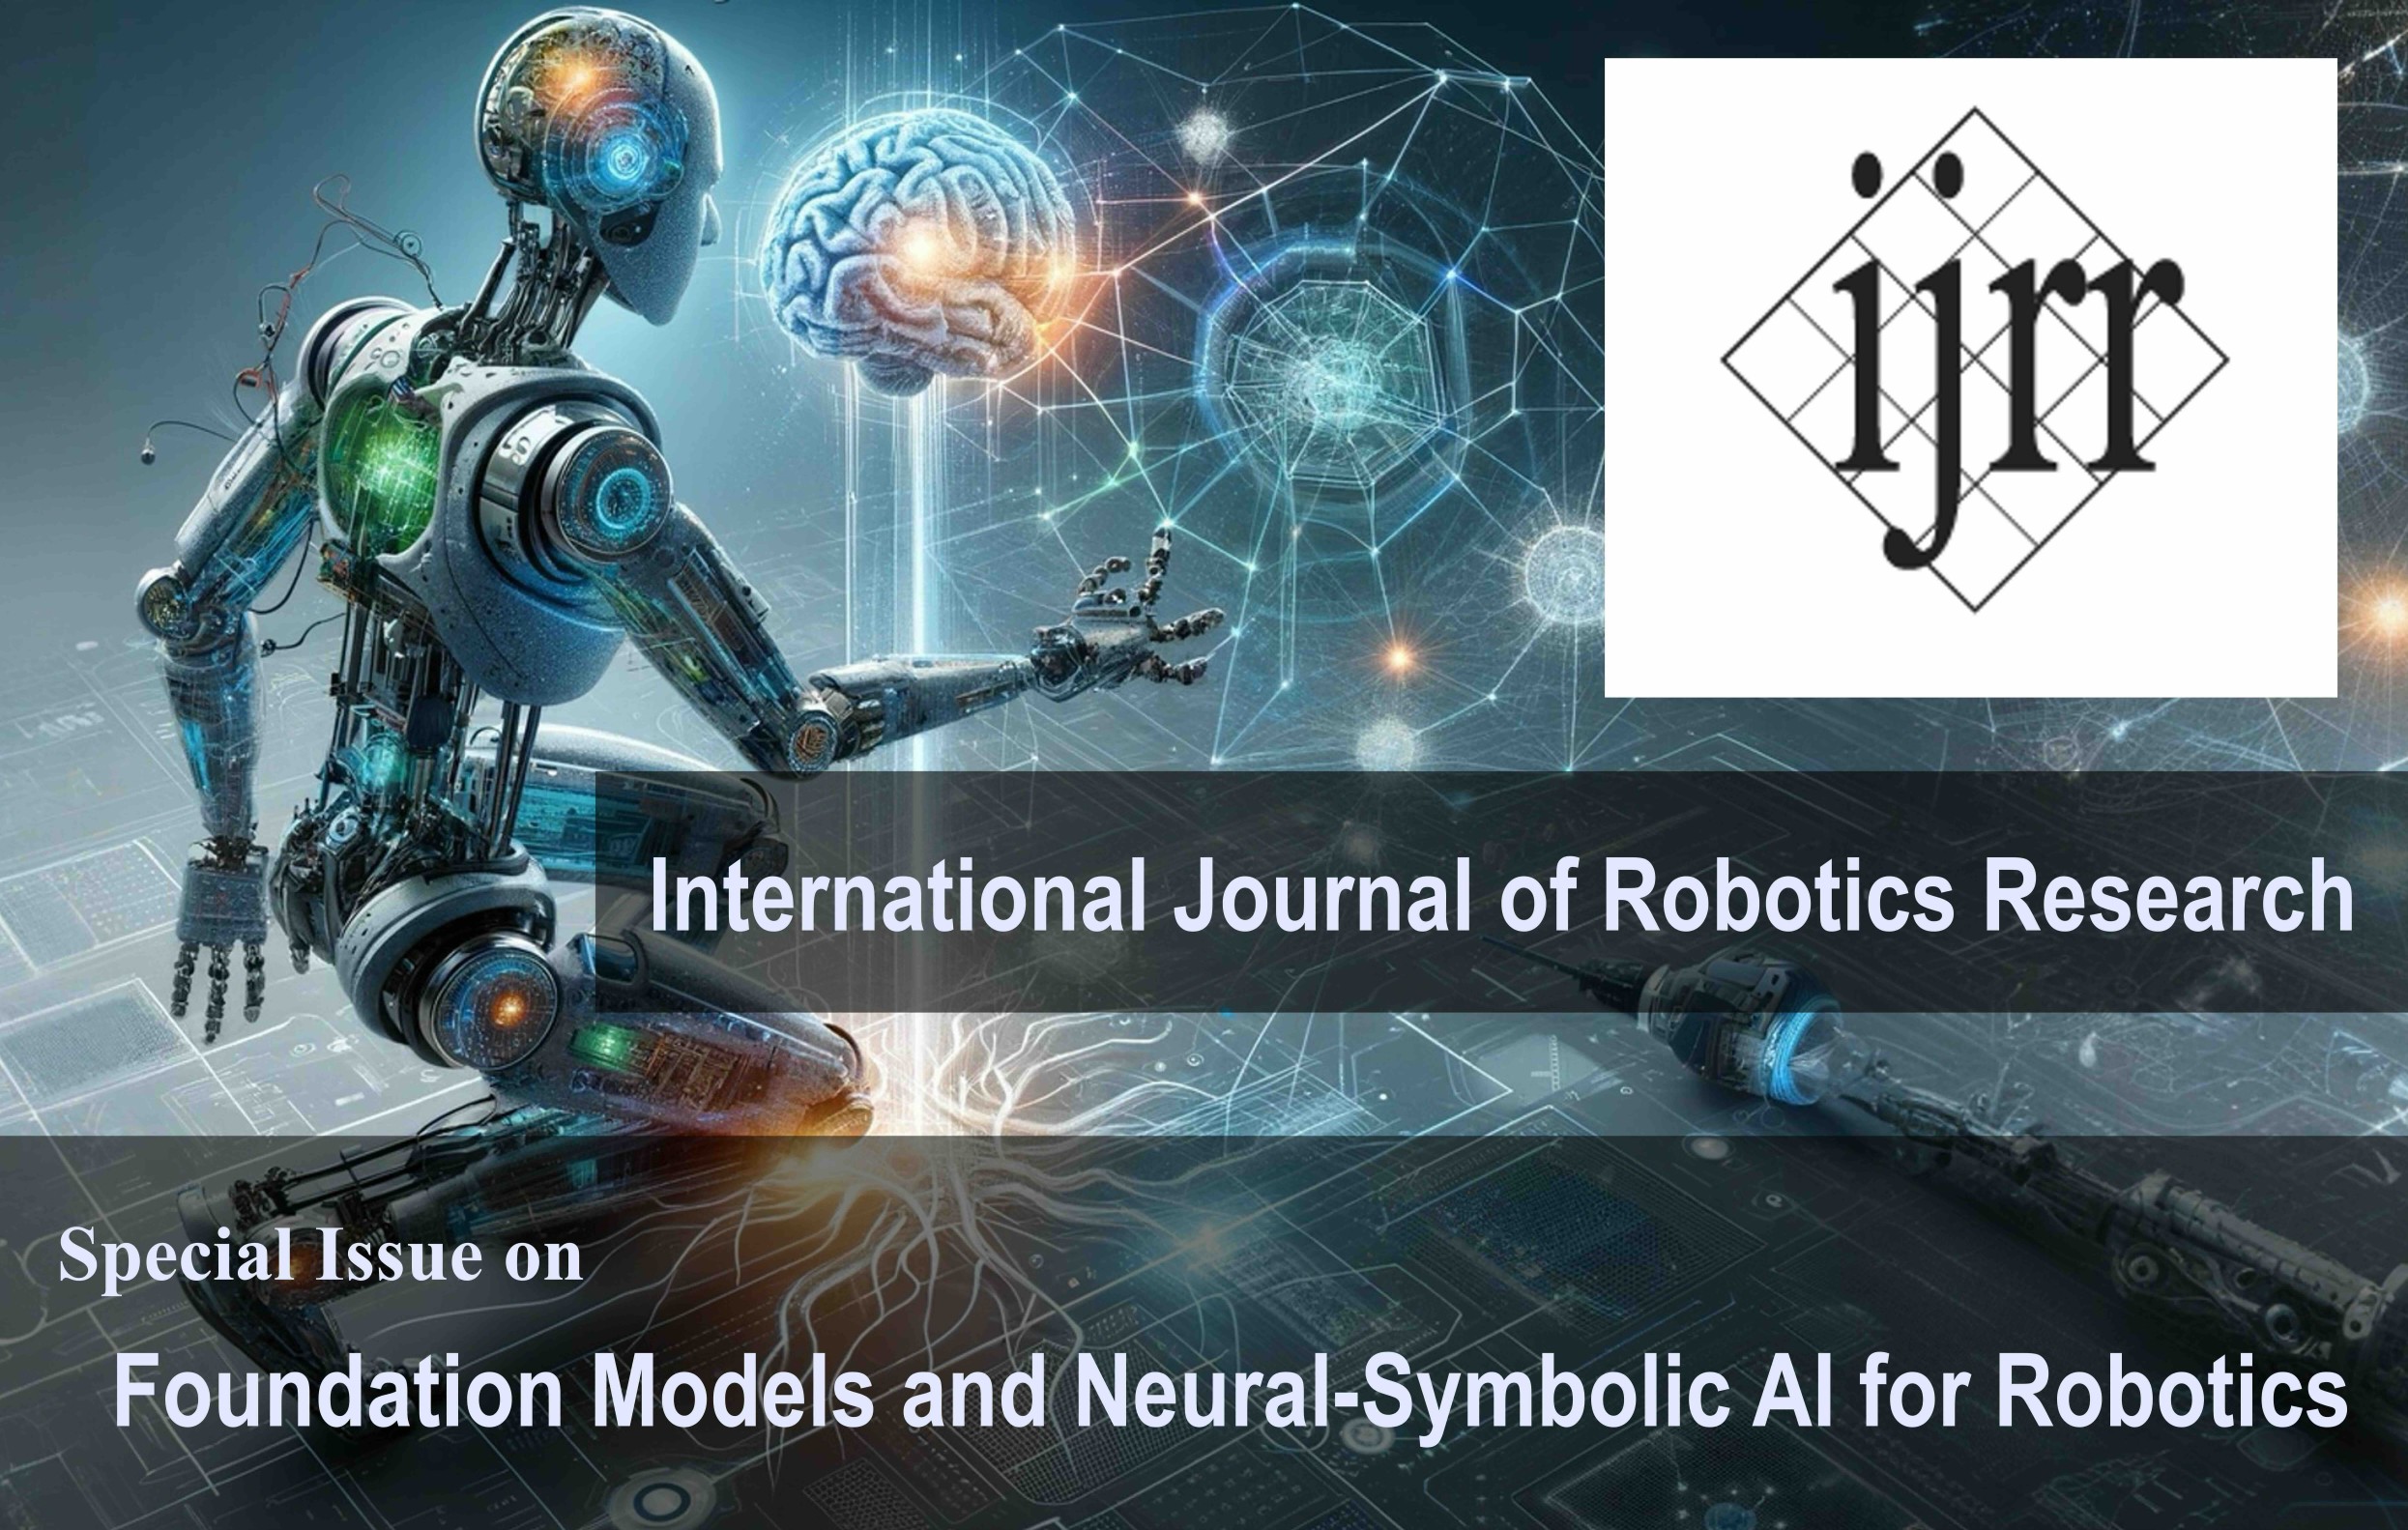 Foundation Models and Neural-Symbolic AI for Robotics